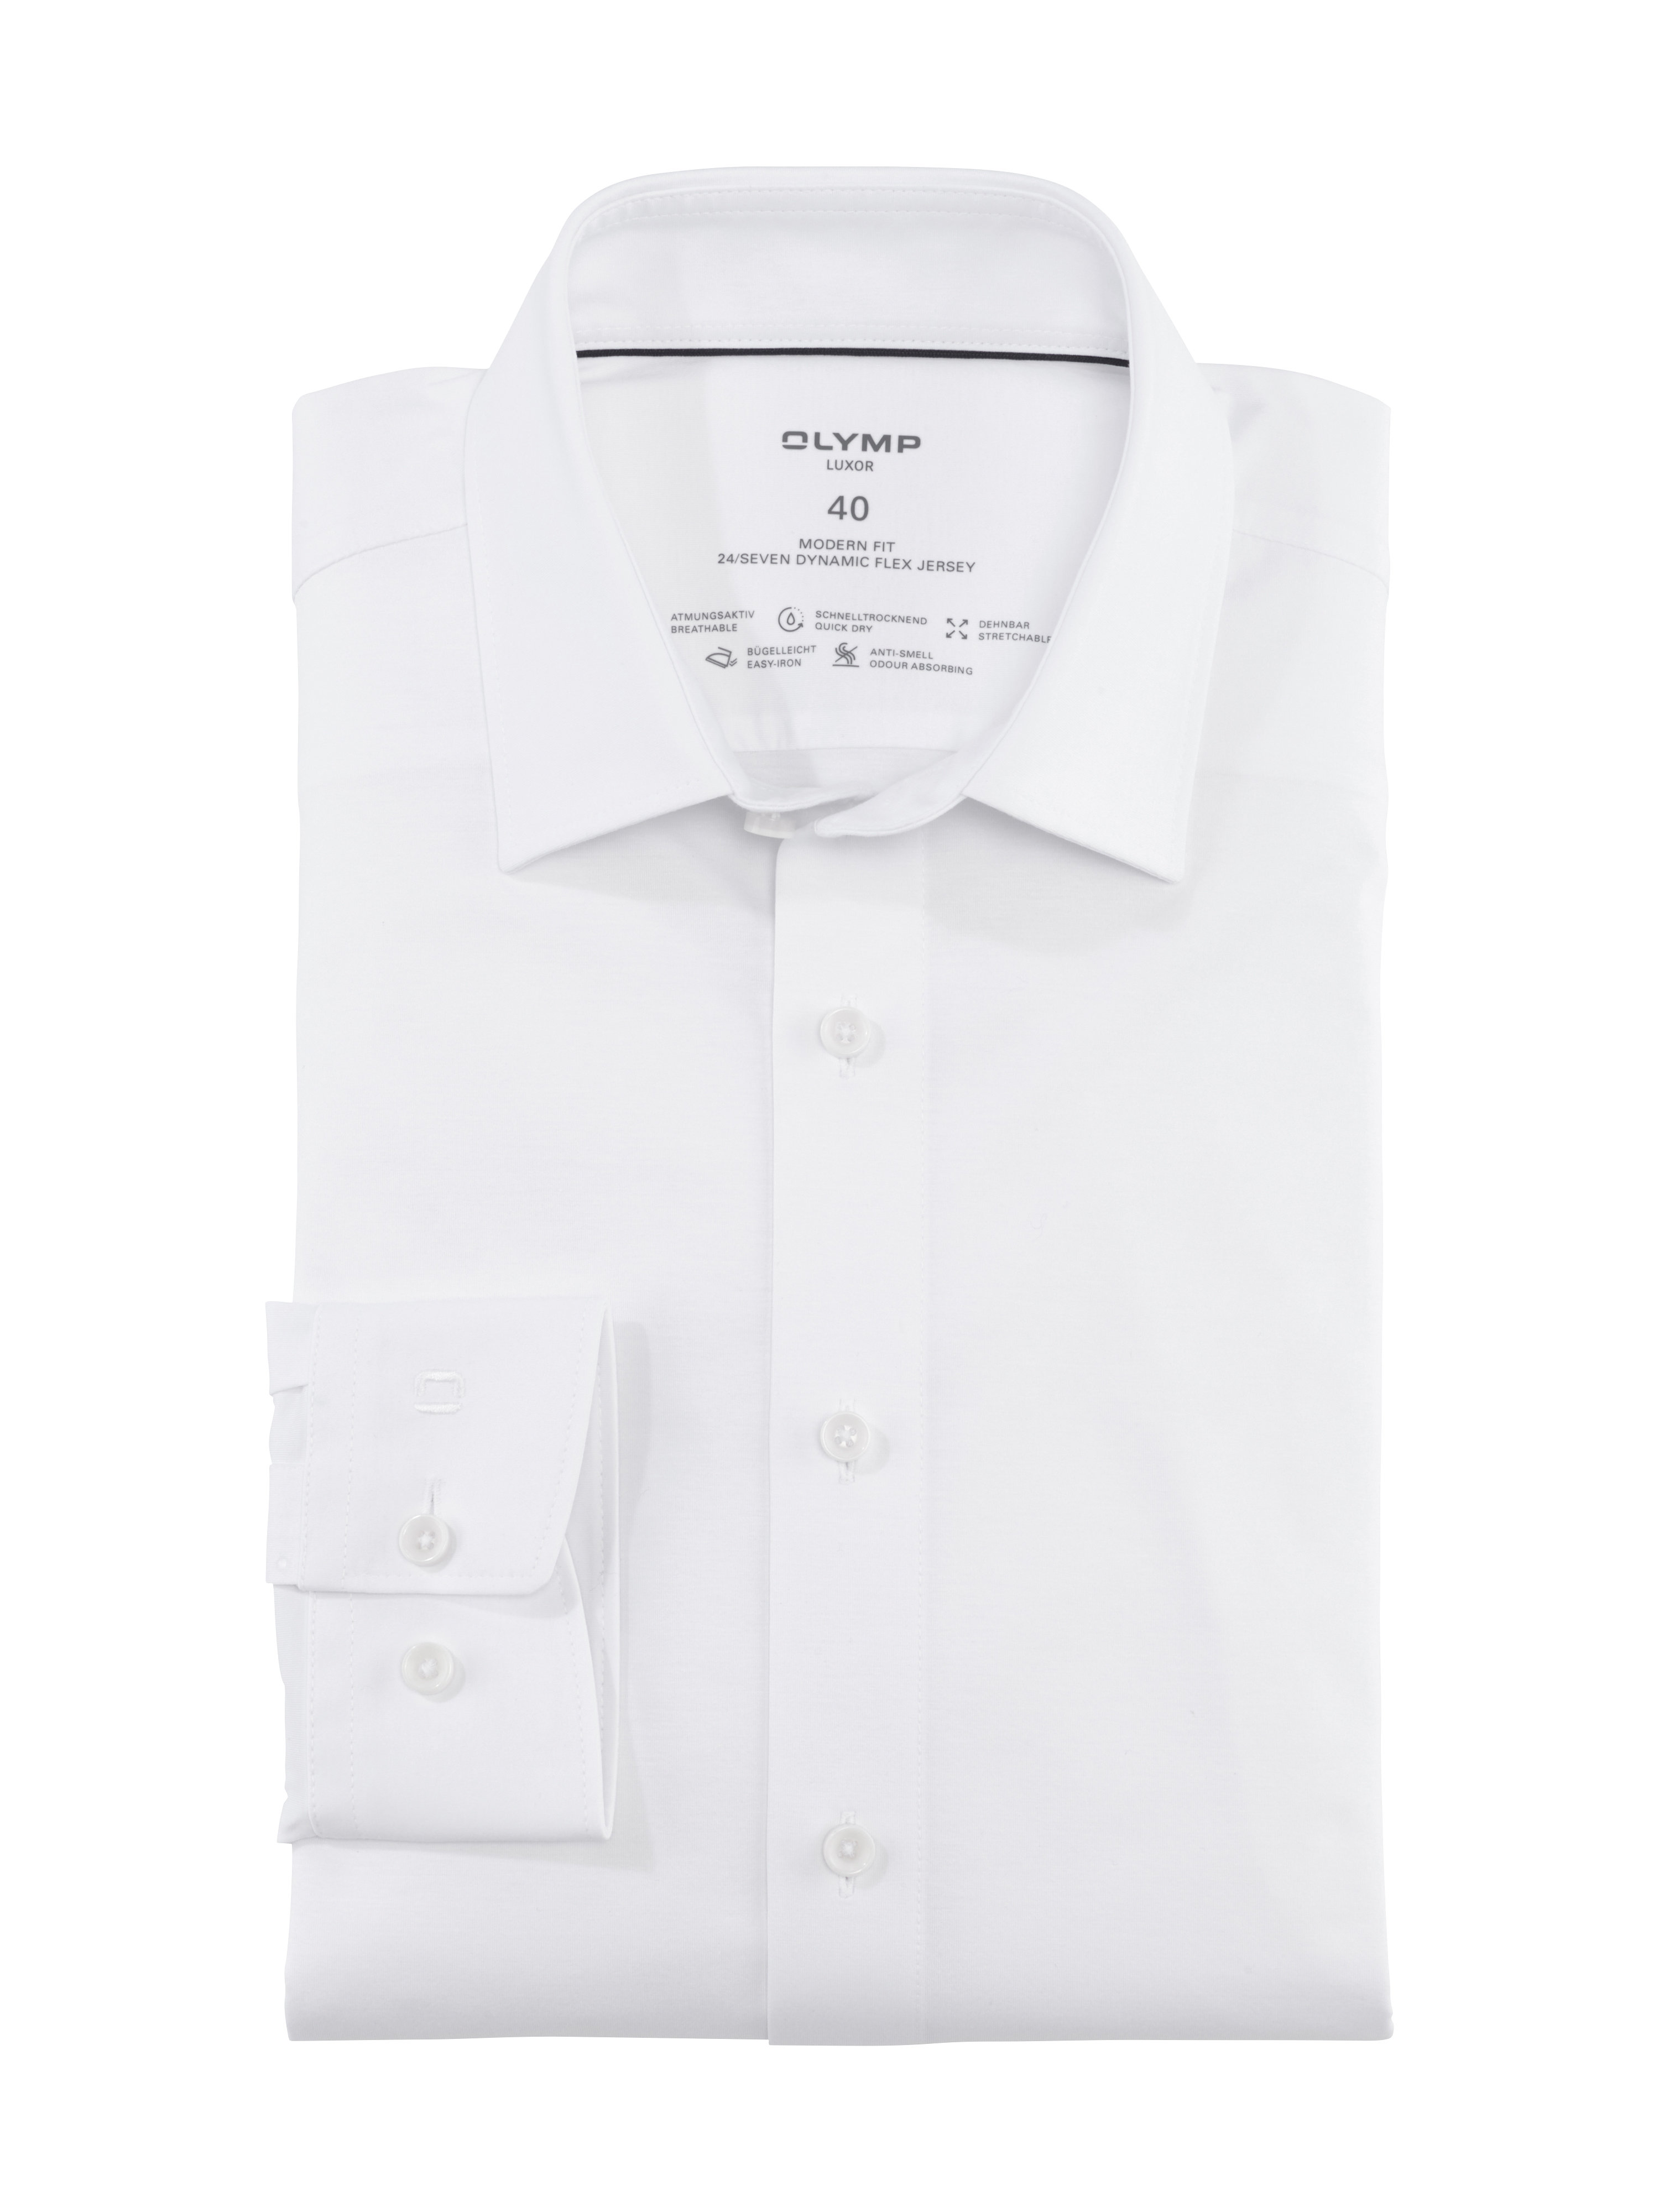 Business shirt - | White OLYMP fit, | New Luxor modern 24/Seven, 12026400 Kent